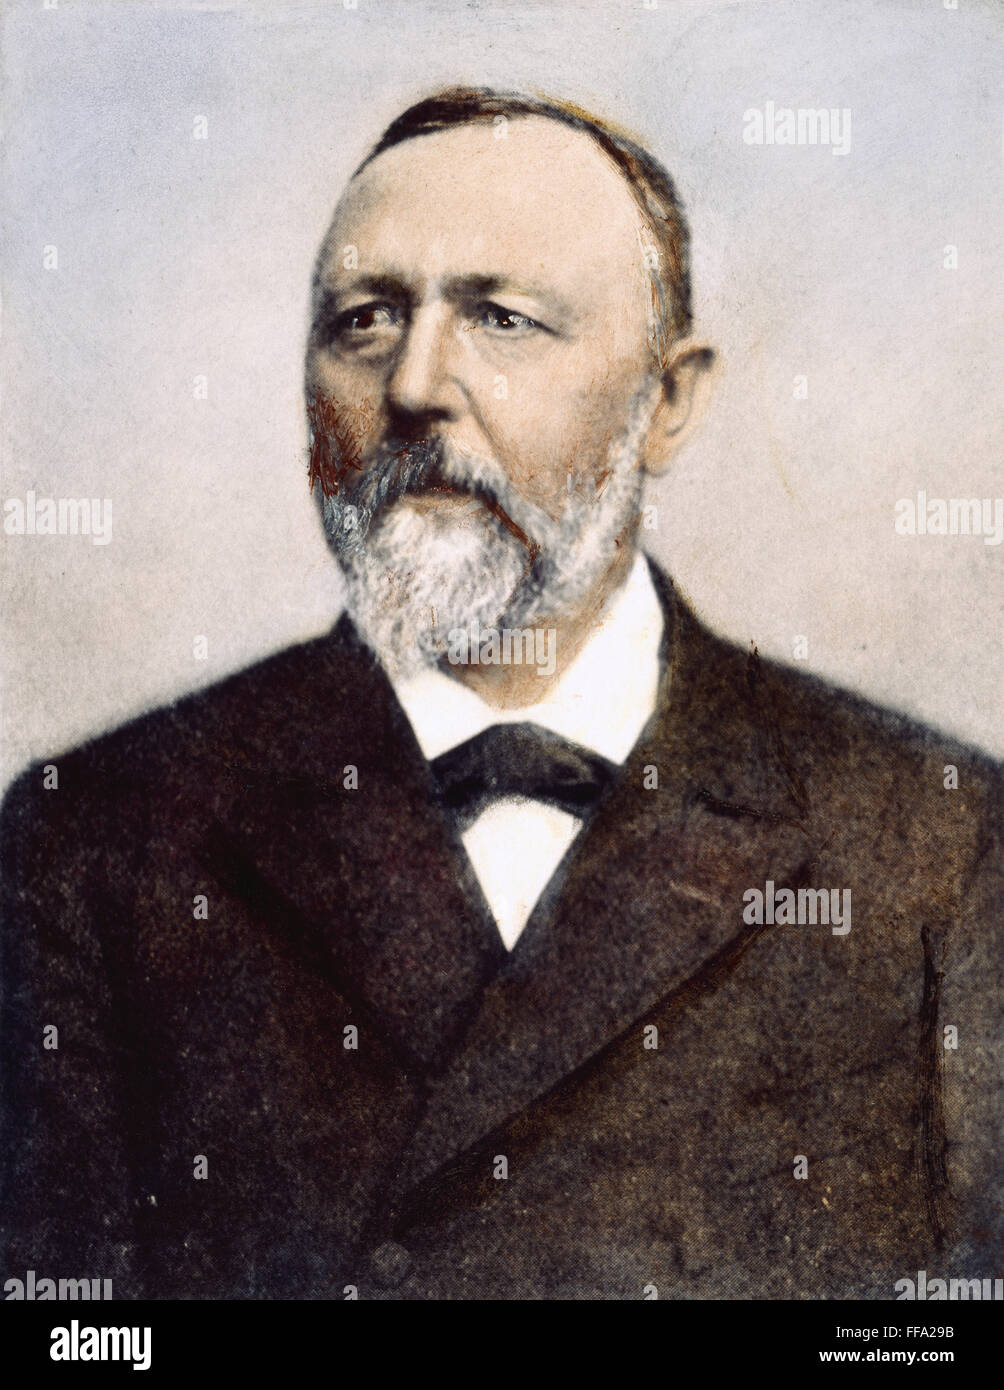 RICHARD von KRAFFT-EBING /n(1840-1902). German neuropsychiatrist: oil over a photograph, n.d. Stock Photo